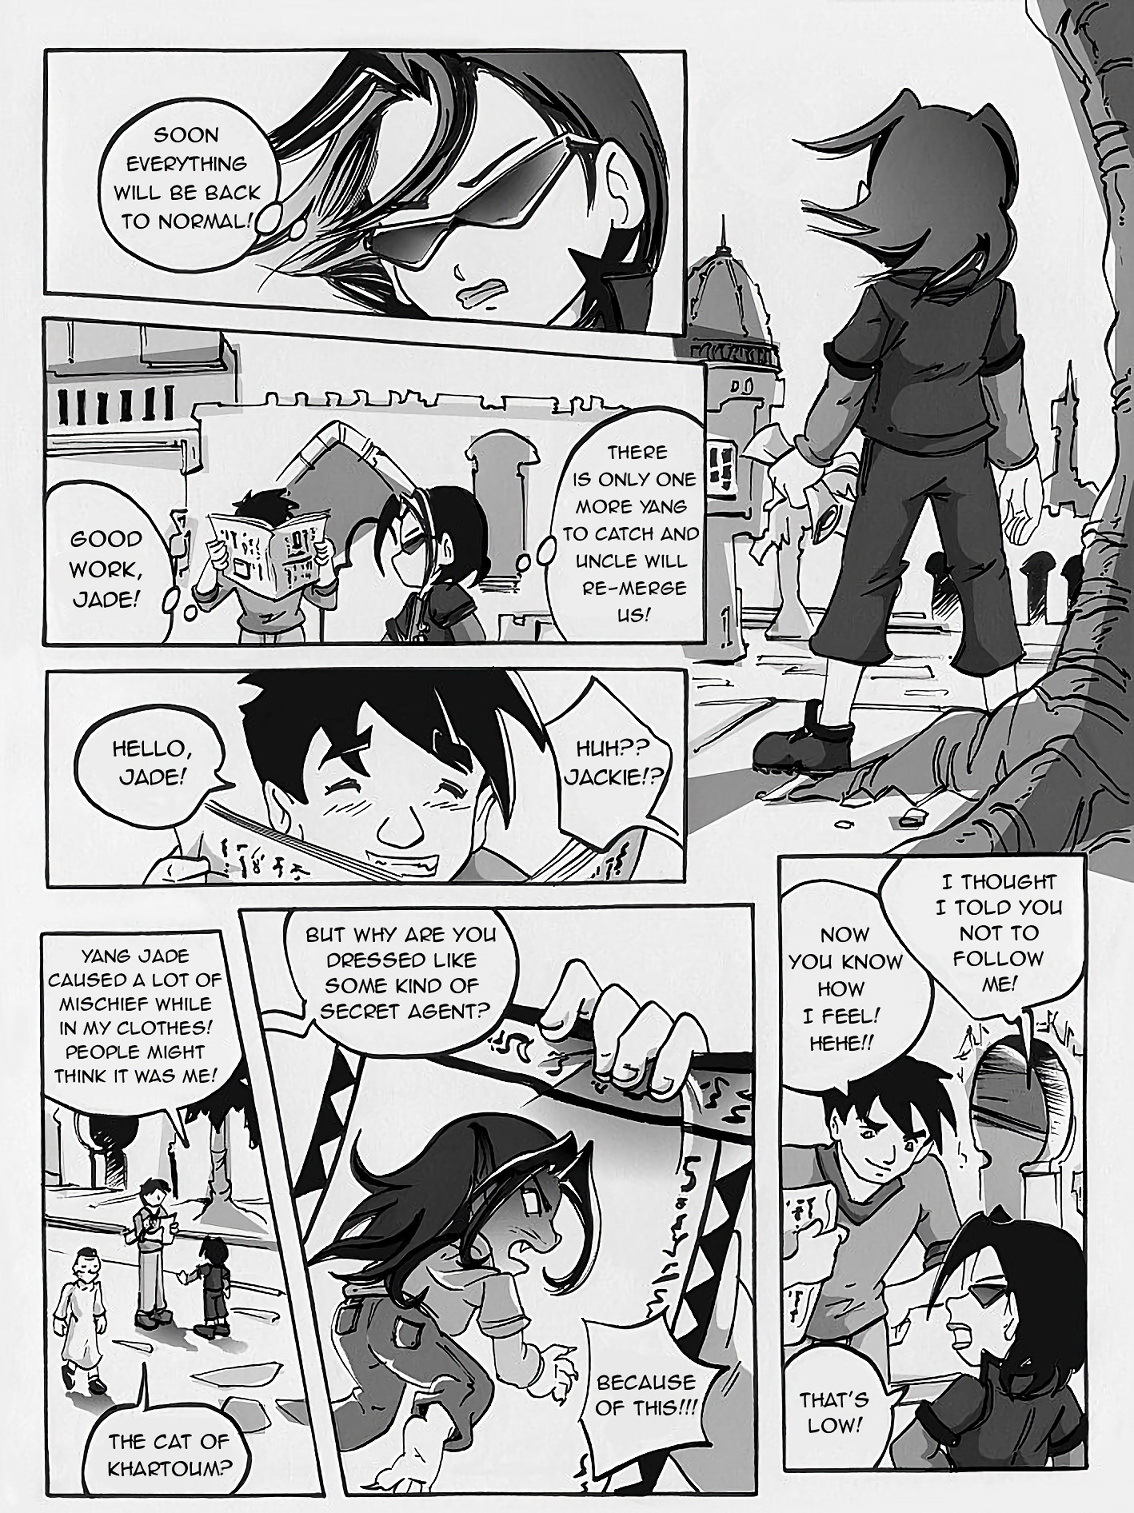 Jade Adventure - Page 44